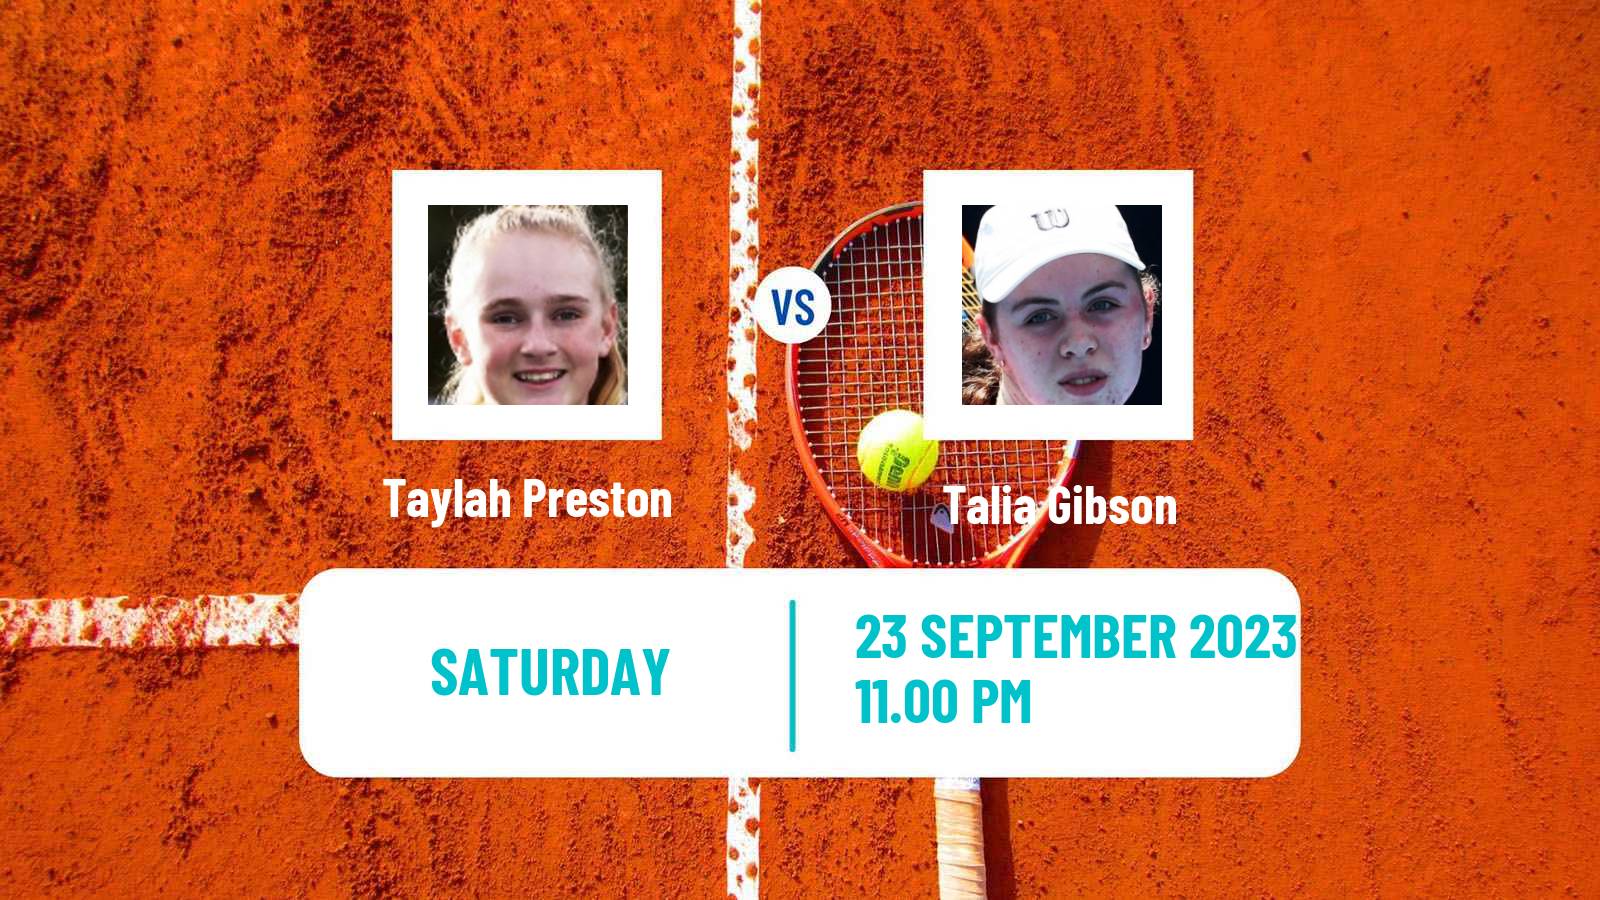 Tennis ITF W25 Perth 2 Women Taylah Preston - Talia Gibson